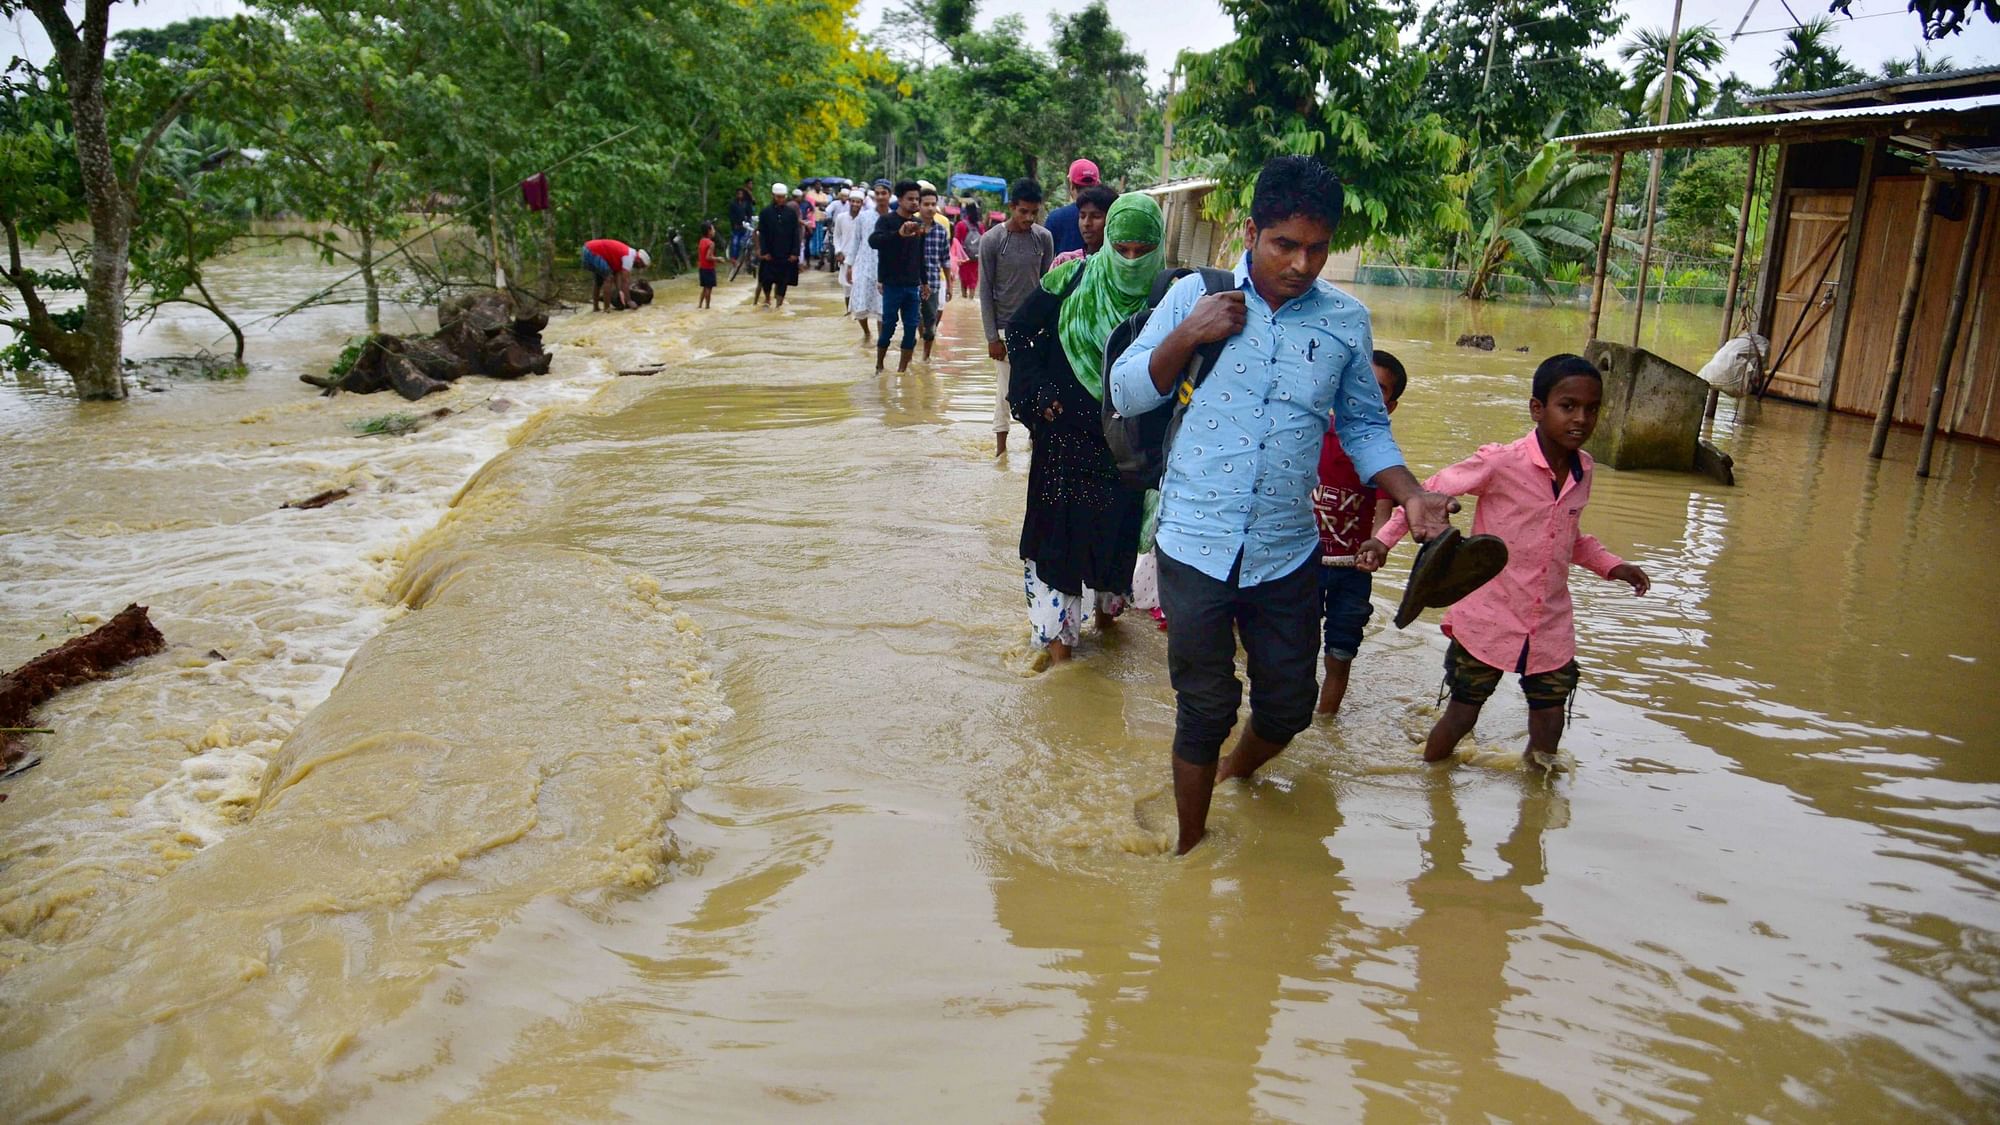 <div class="paragraphs"><p>Villagers wade through a flood-affected area following heavy rains in Hojai district of Assam.&nbsp;</p></div>